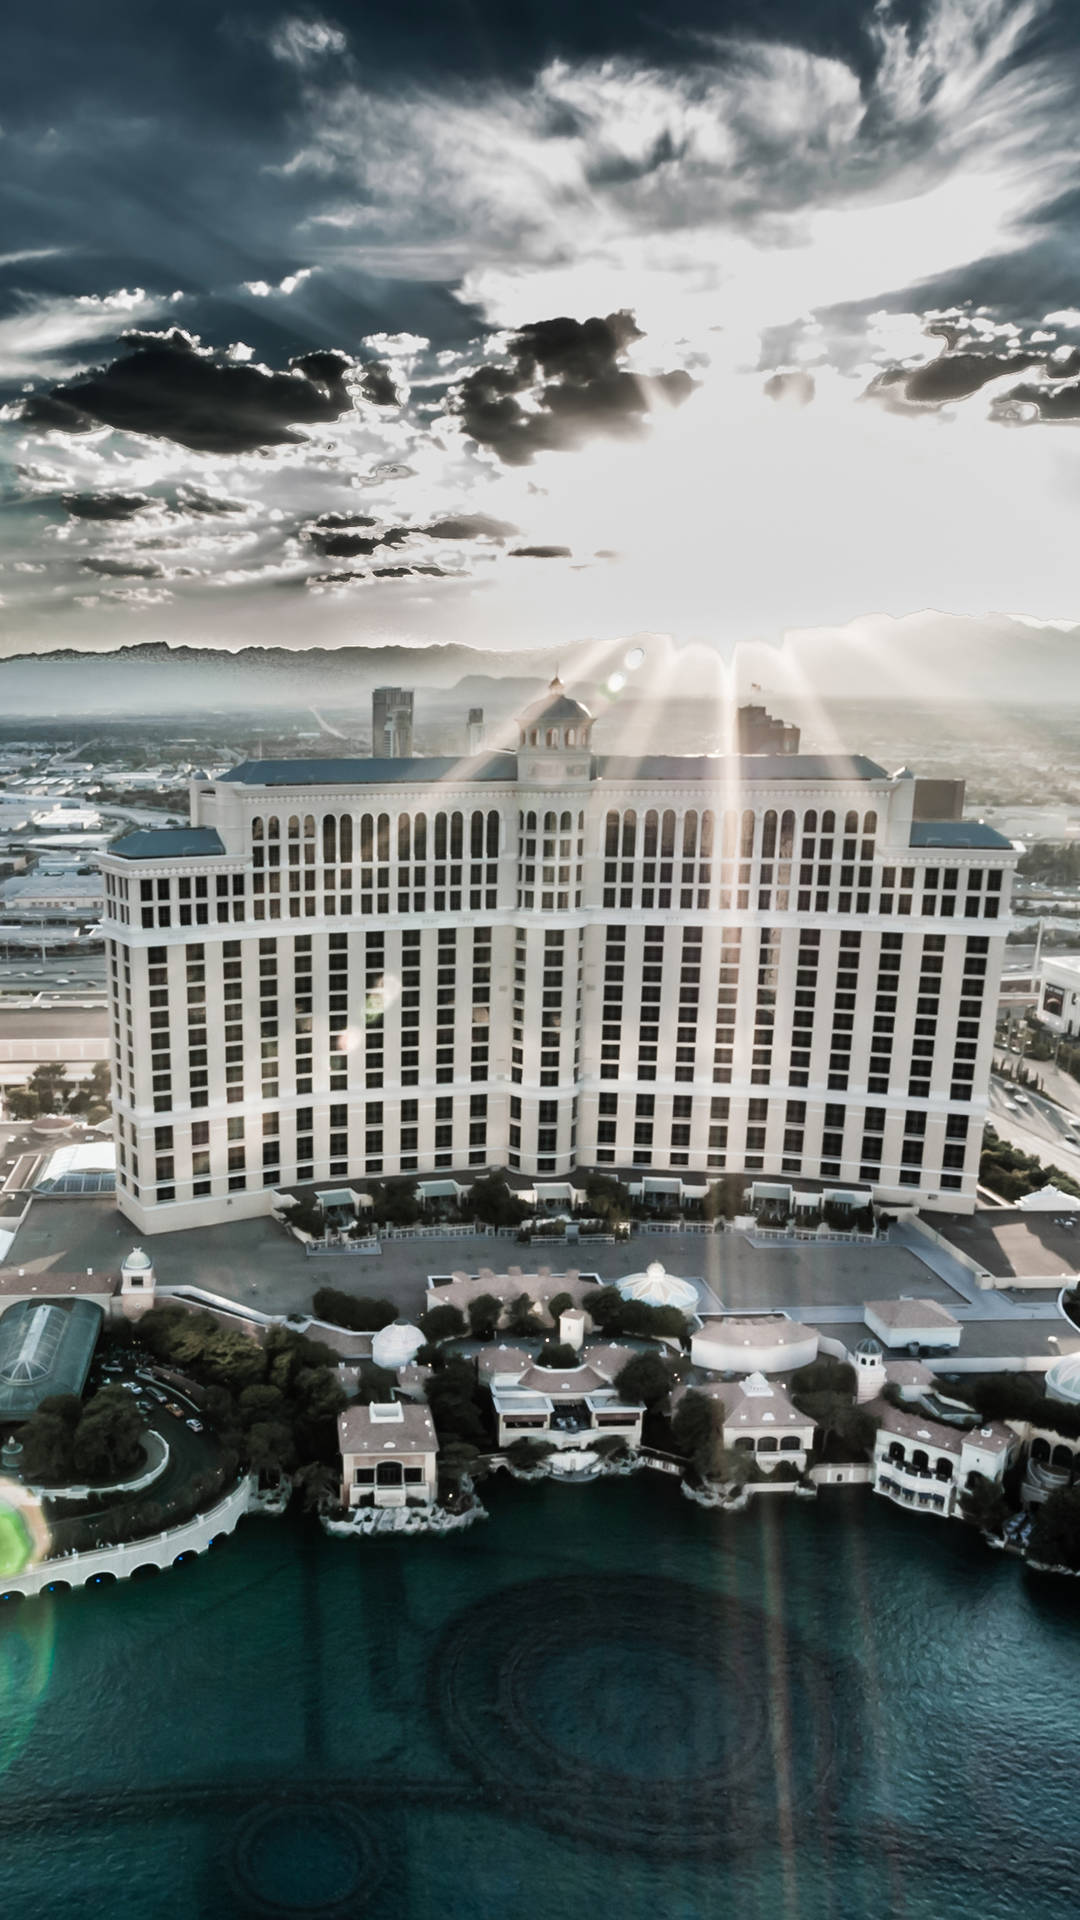 Bellagio Hotel And Casino In Vegas Iphone Wallpaper